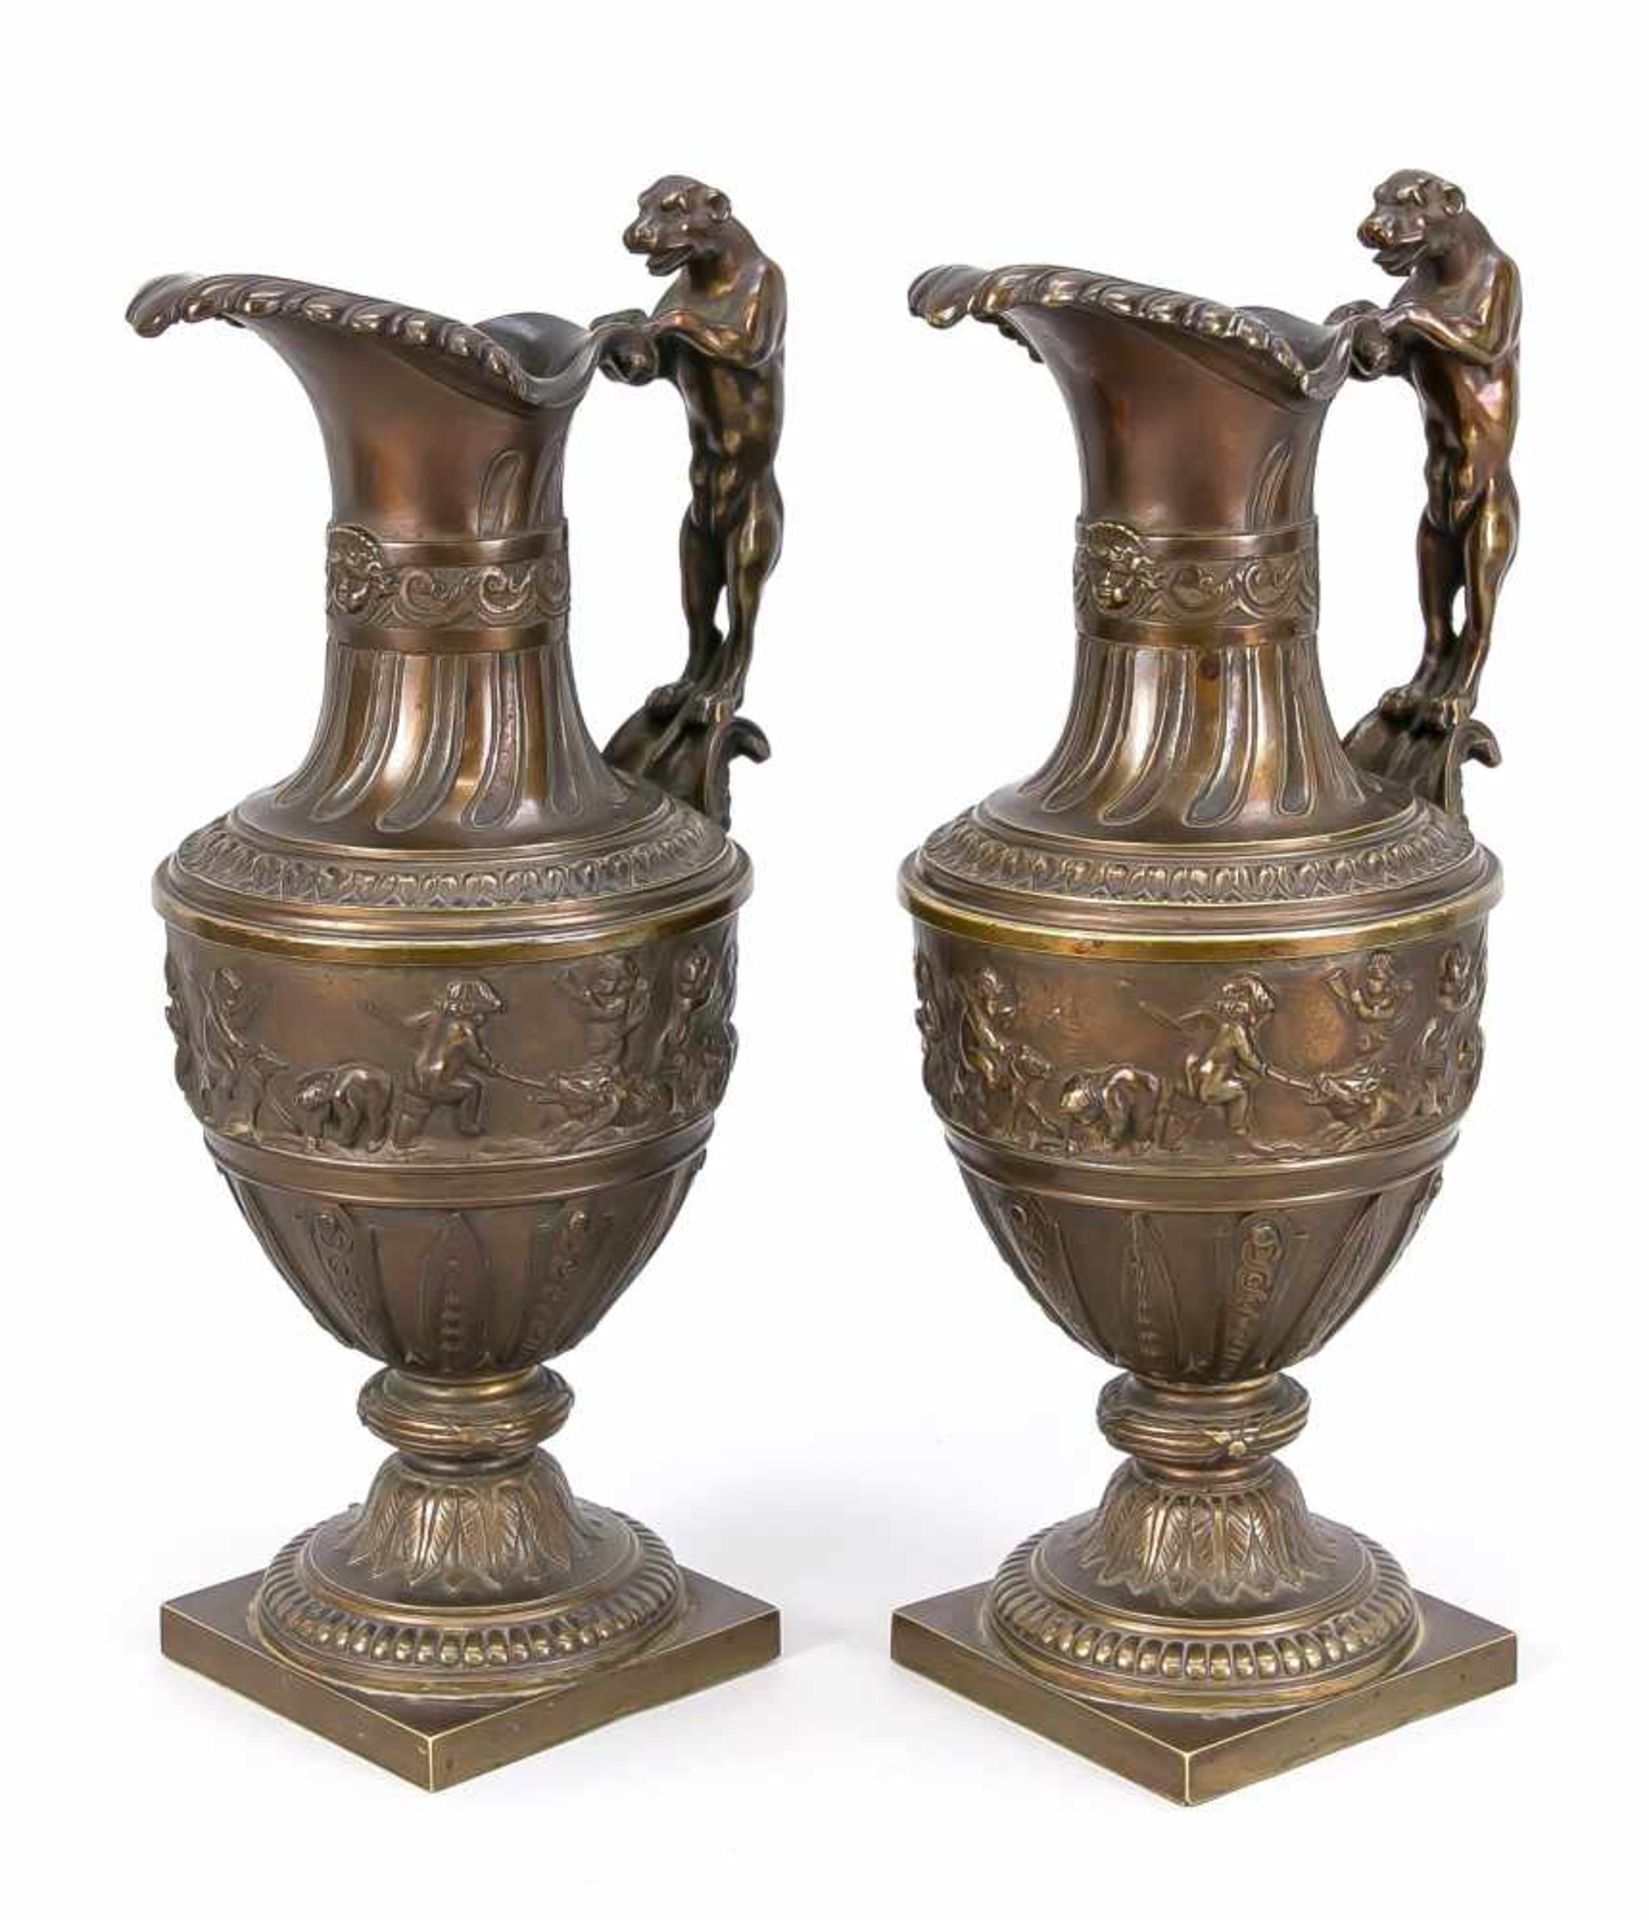 Paar Prunk-Amphorenvasen, Ende 19. Jh., Bronze. Im klassizistischen Stil mit quadratischer